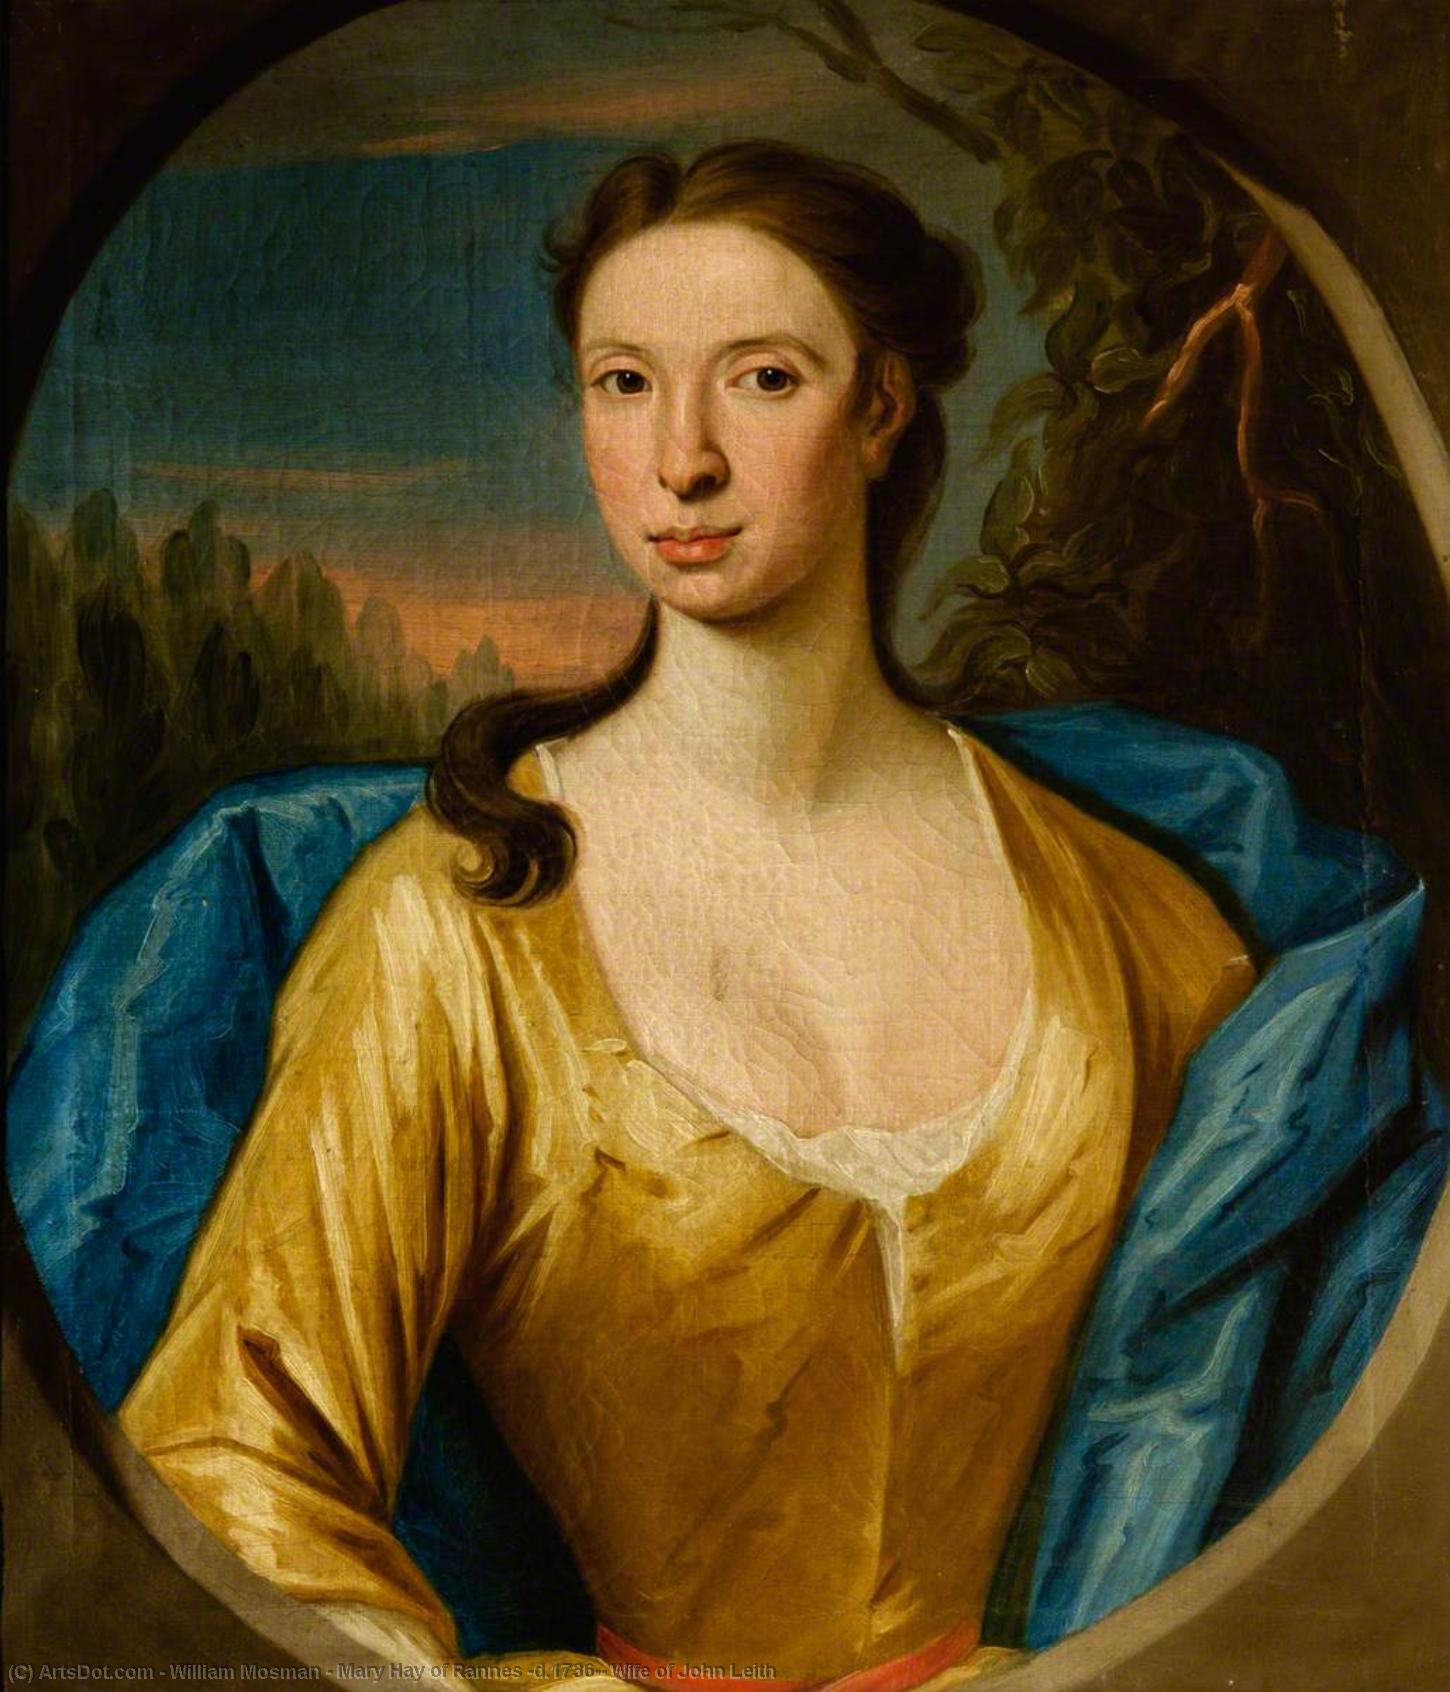 Buy Museum Art Reproductions Mary Hay of Rannes (d.1736), Wife of John Leith by William Mosman (1700-1771) | ArtsDot.com